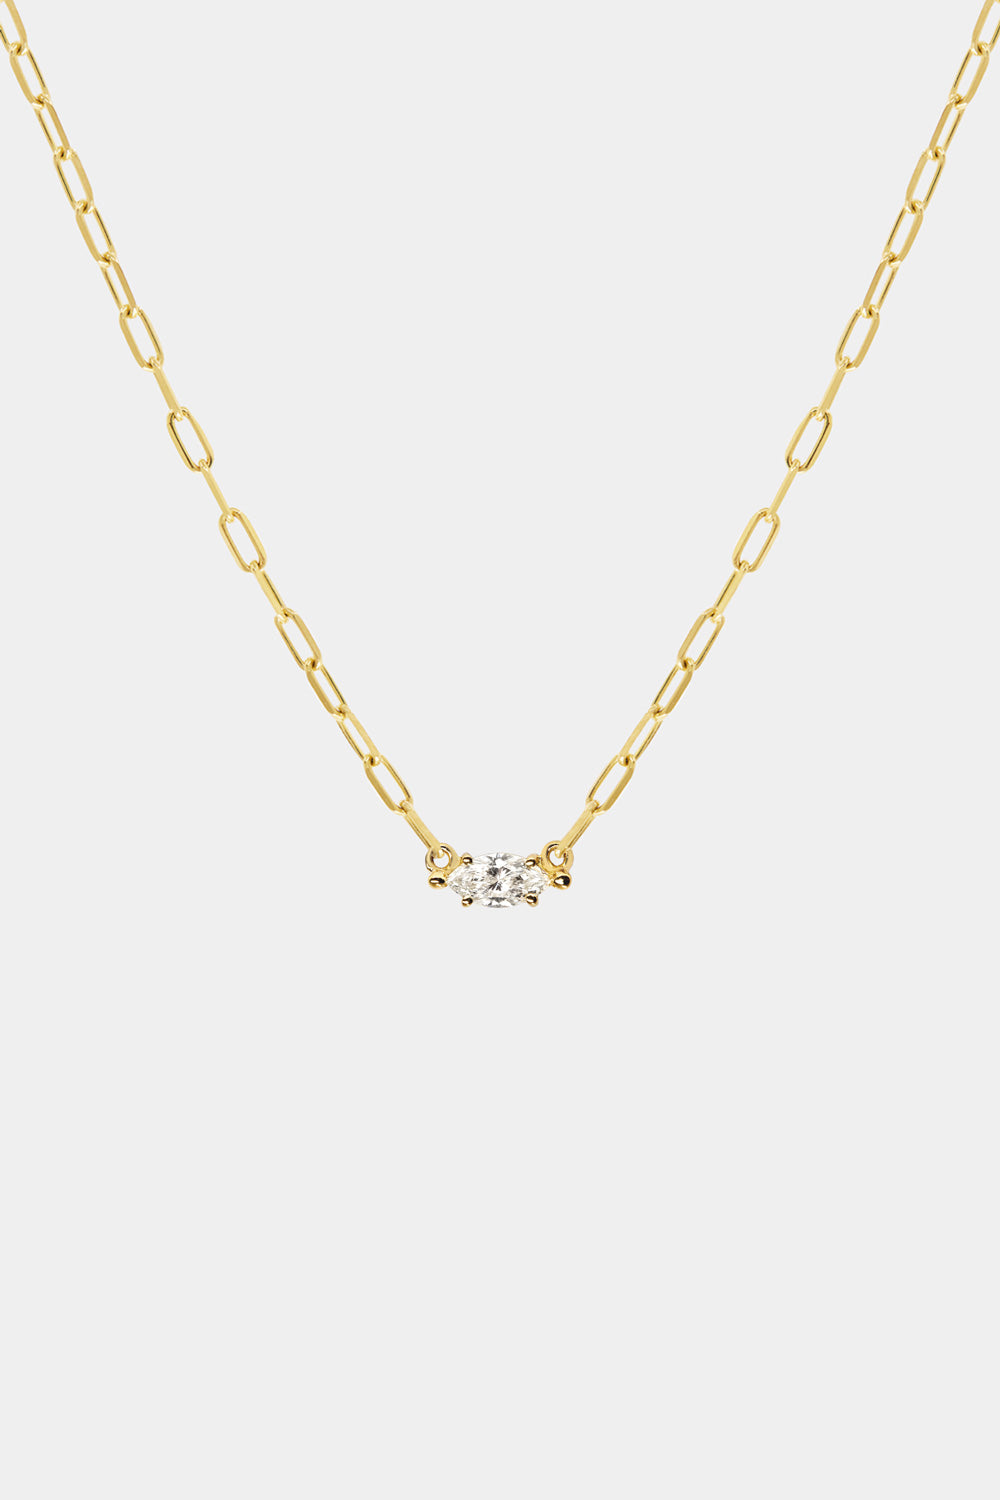 East West Marquise Diamond Necklace | 18K Yellow Gold| Natasha Schweitzer